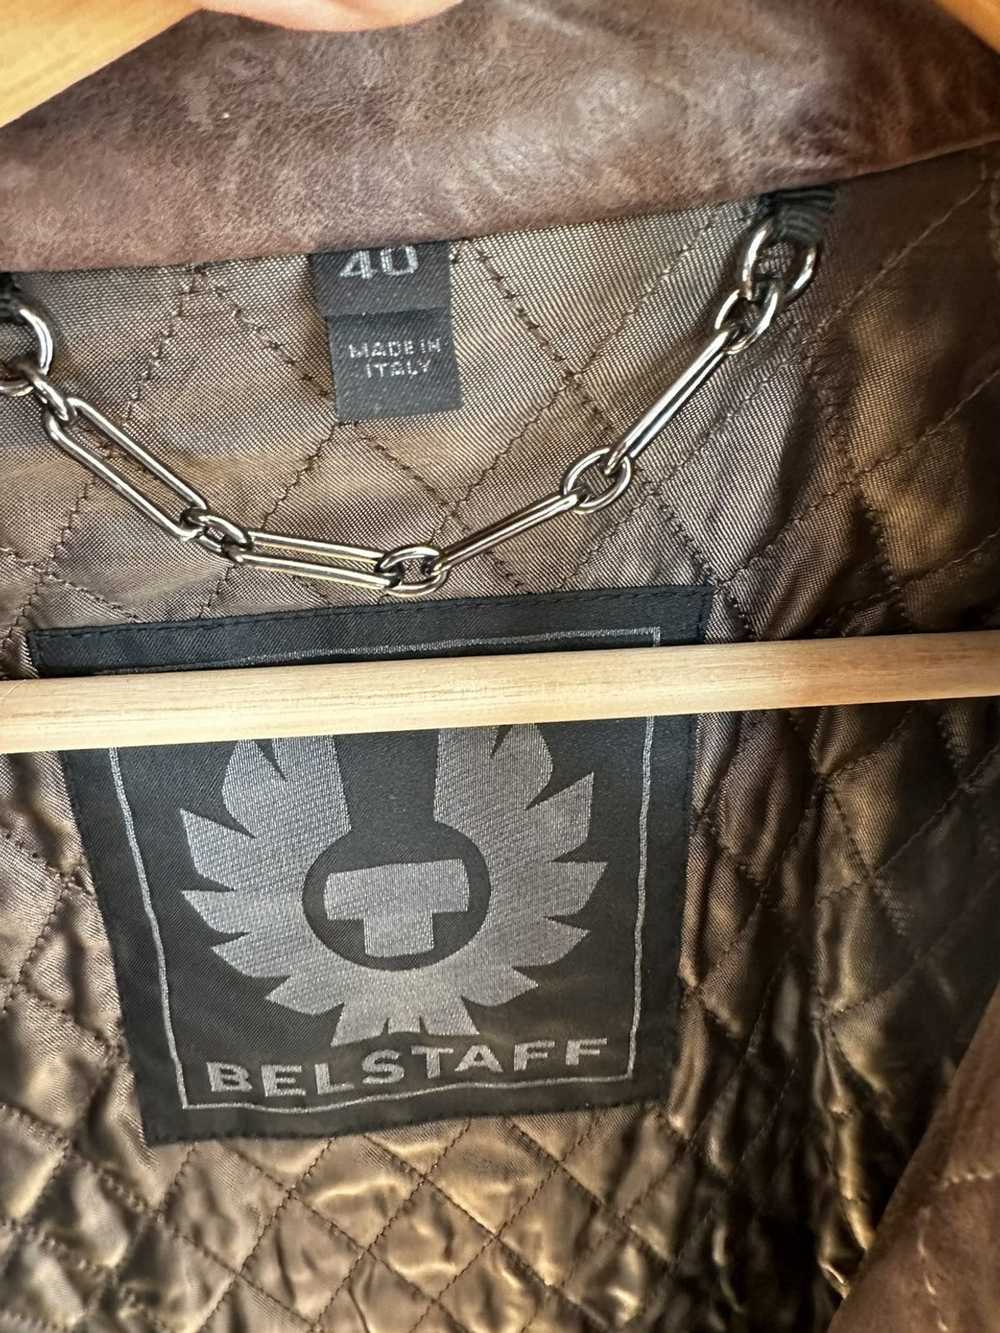 Belstaff Belstaff Woman’s Motorcycle Jacket - image 8